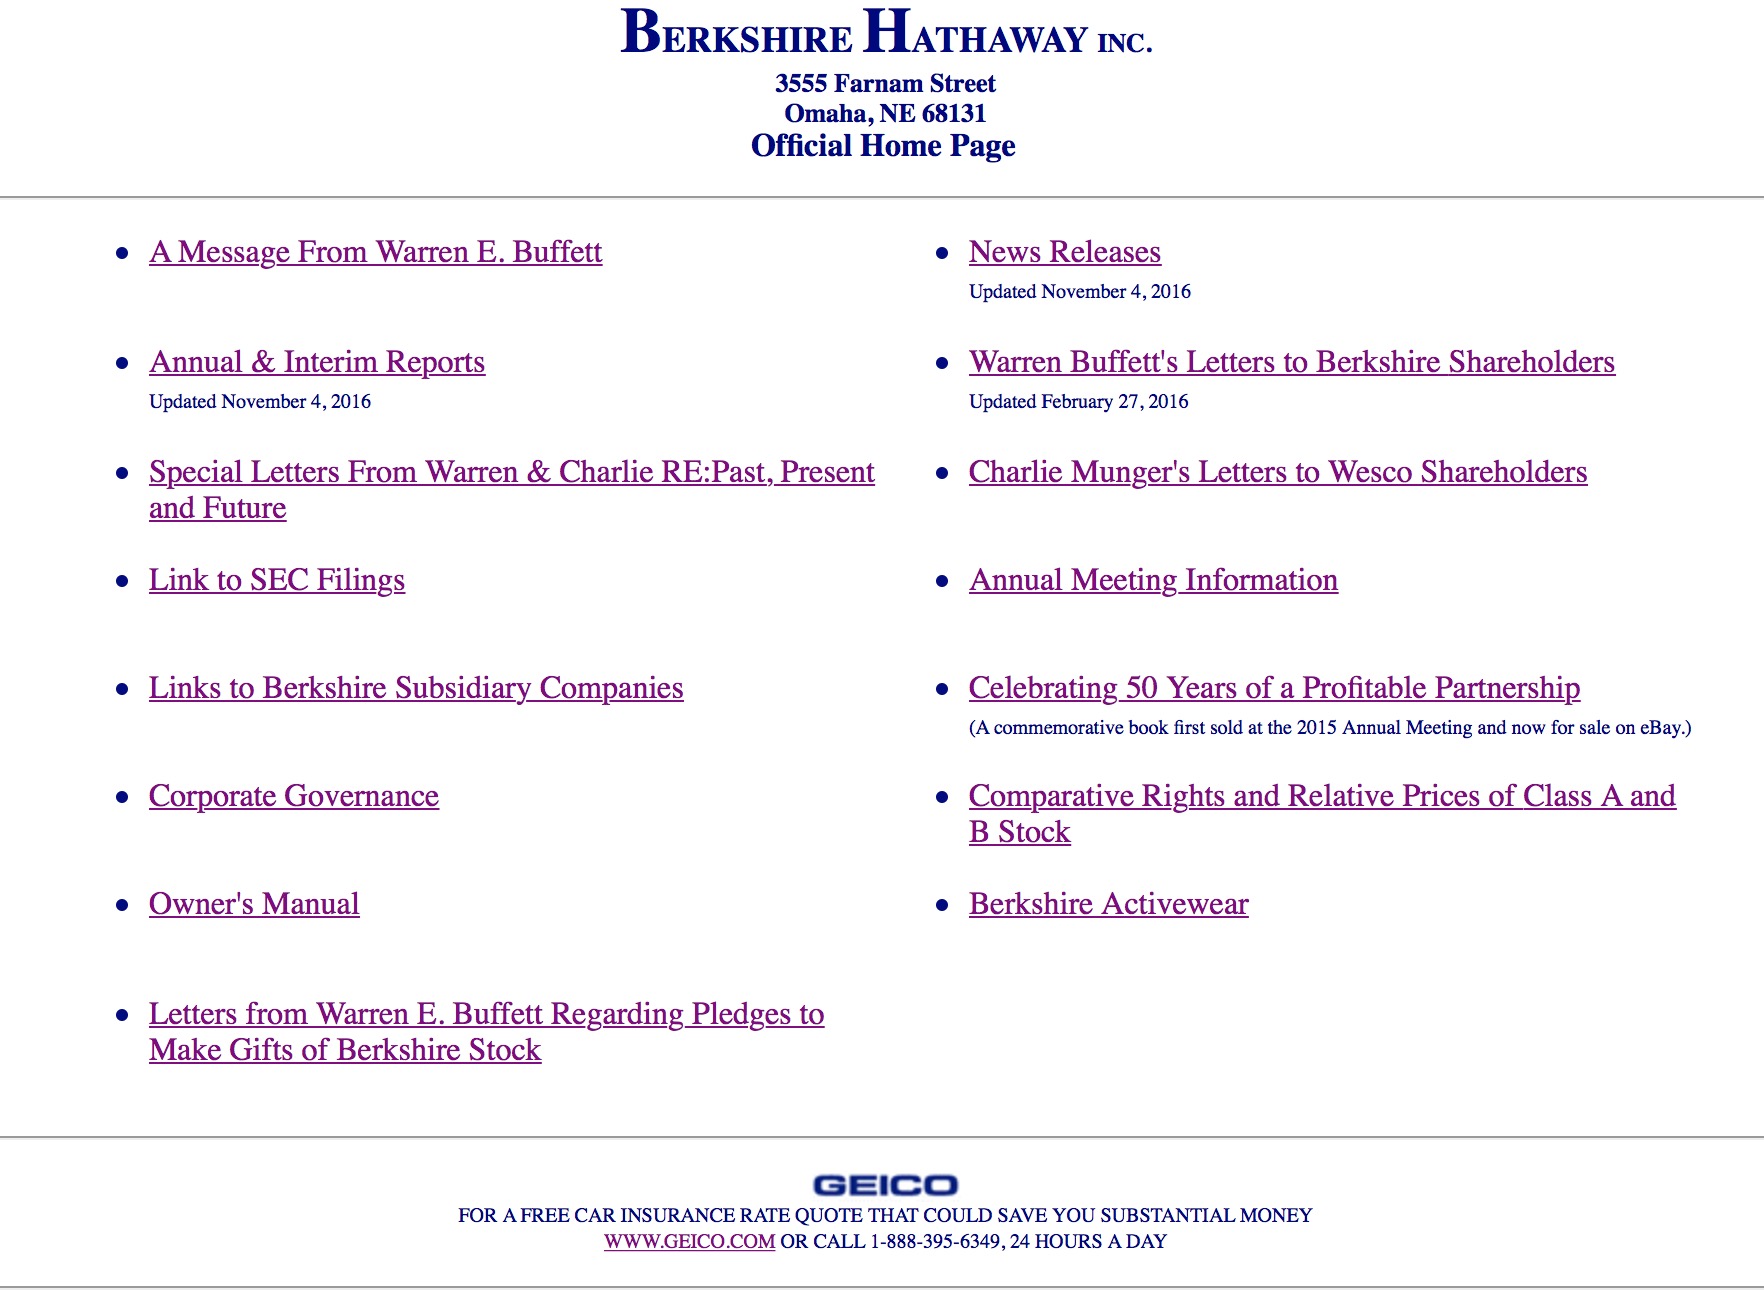 Berkshire Hathaway website screenshot